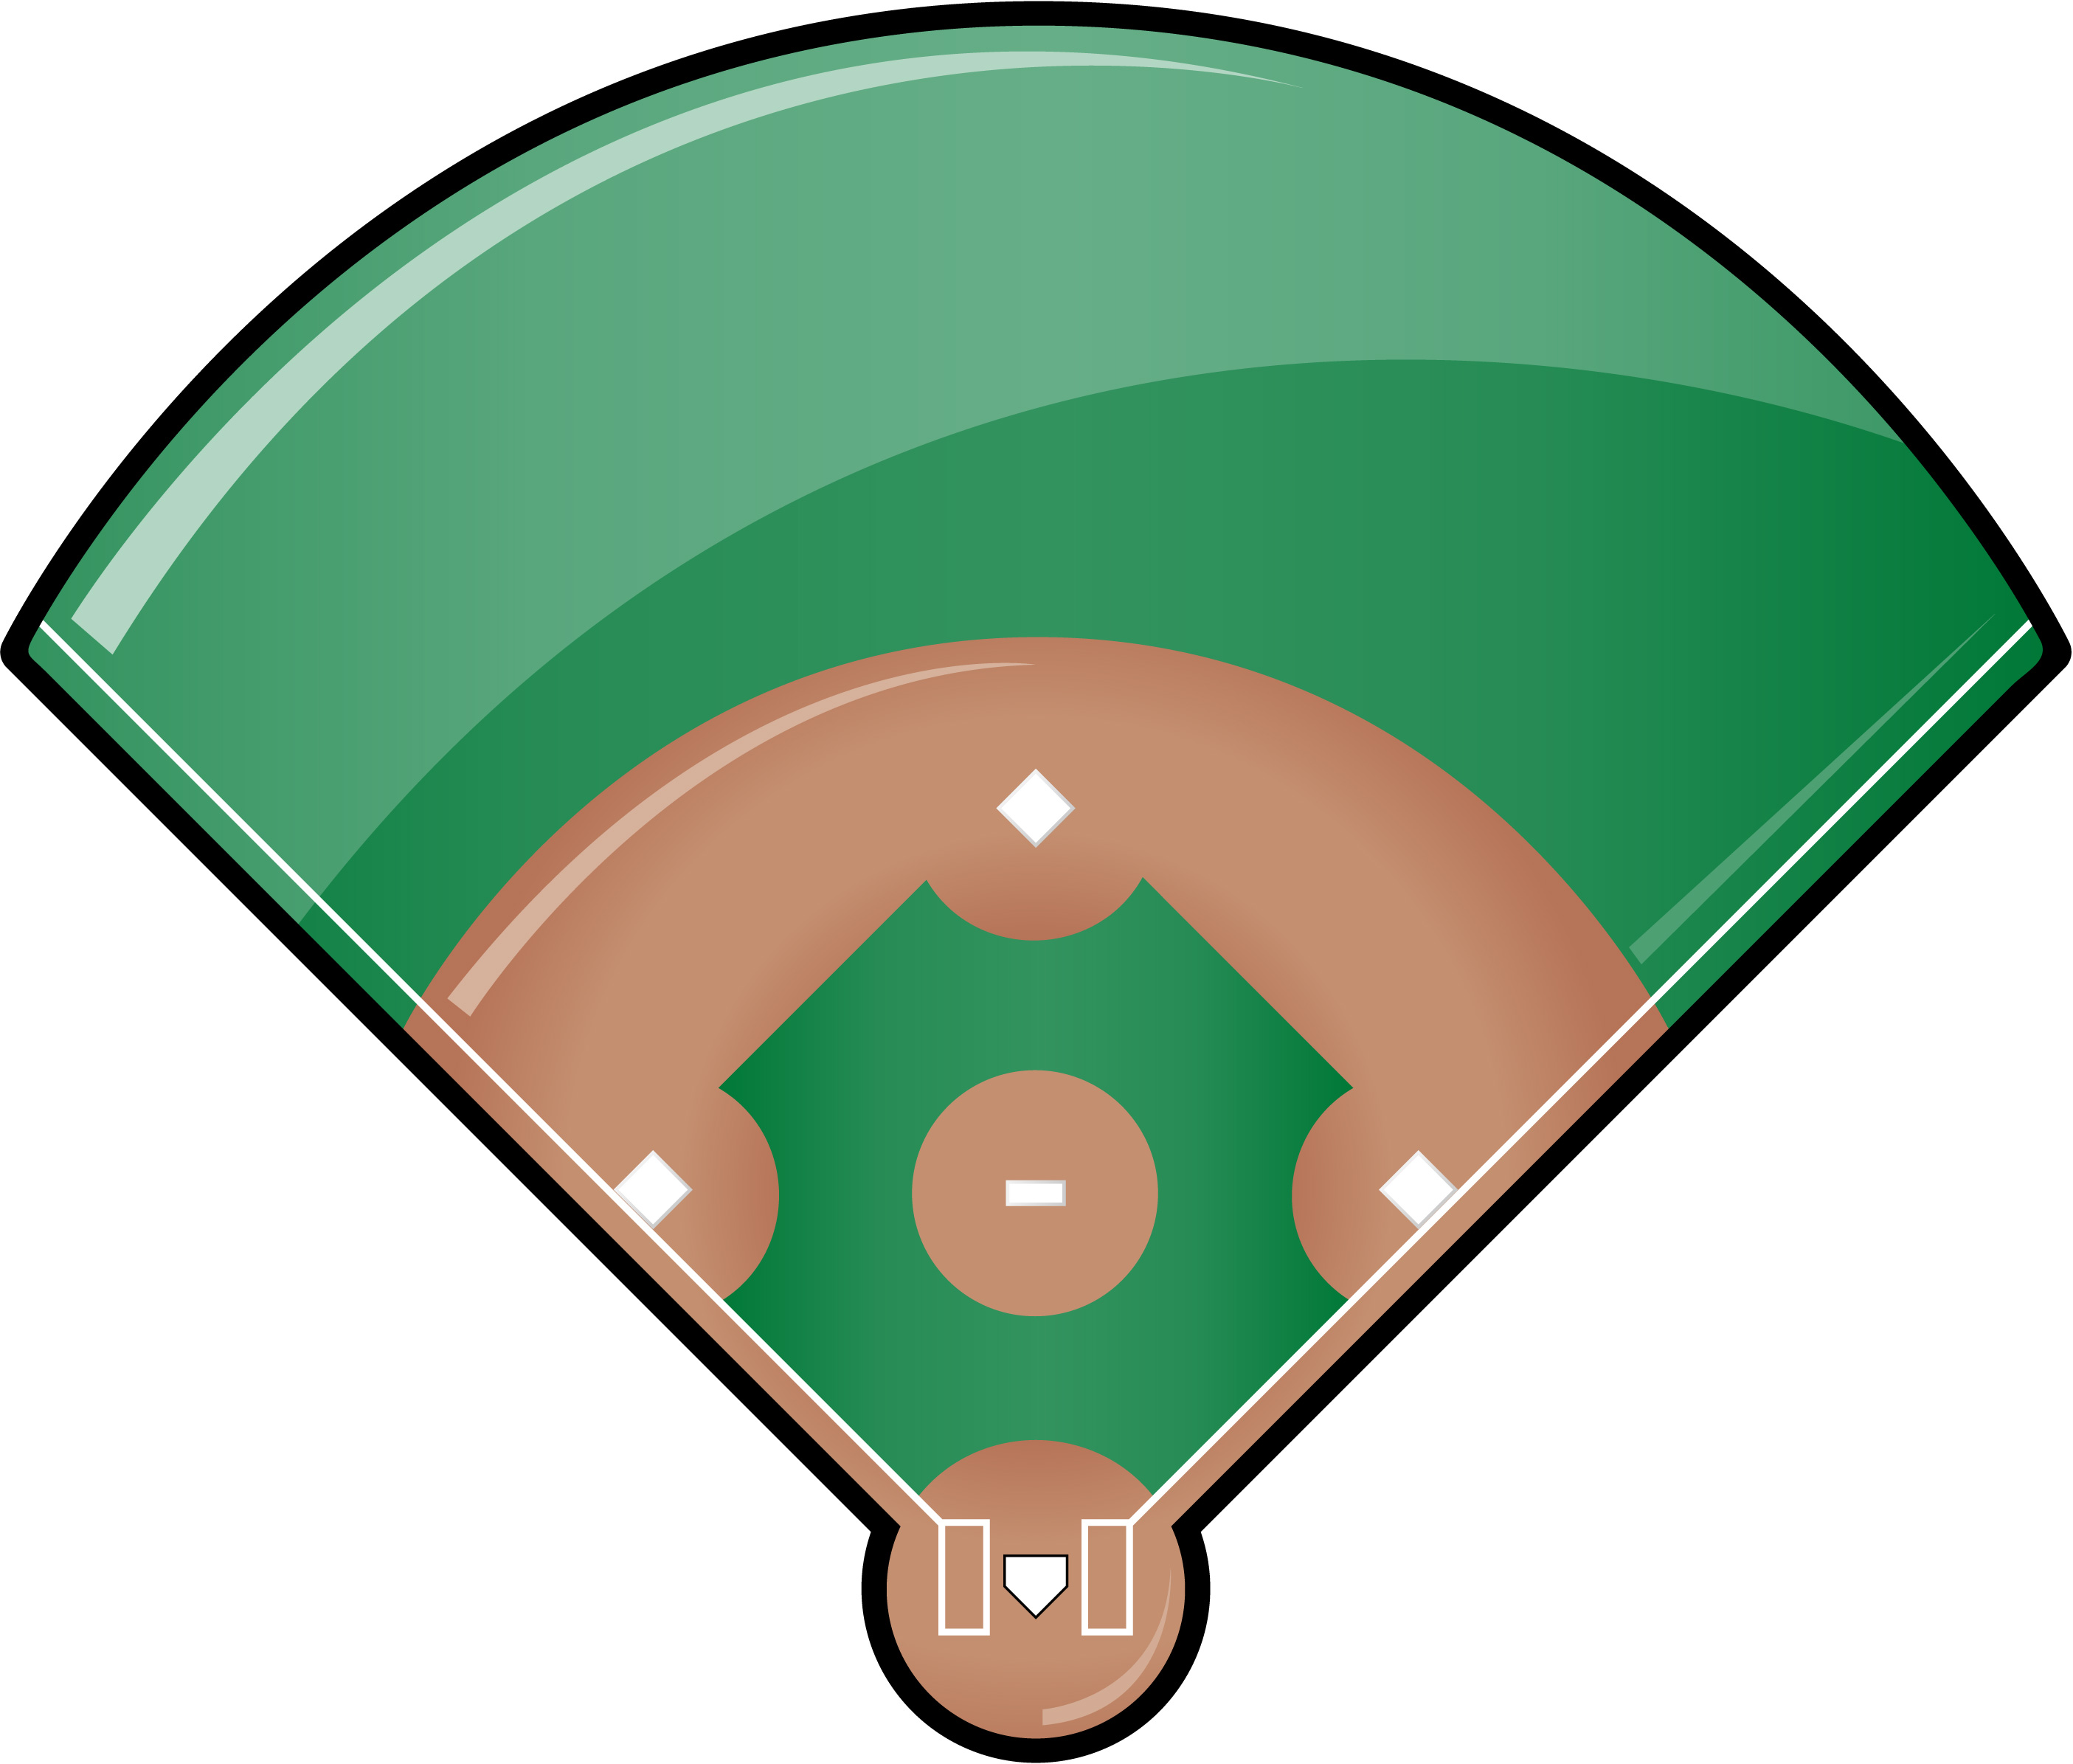 Baseball diamond baseball field clipart free images